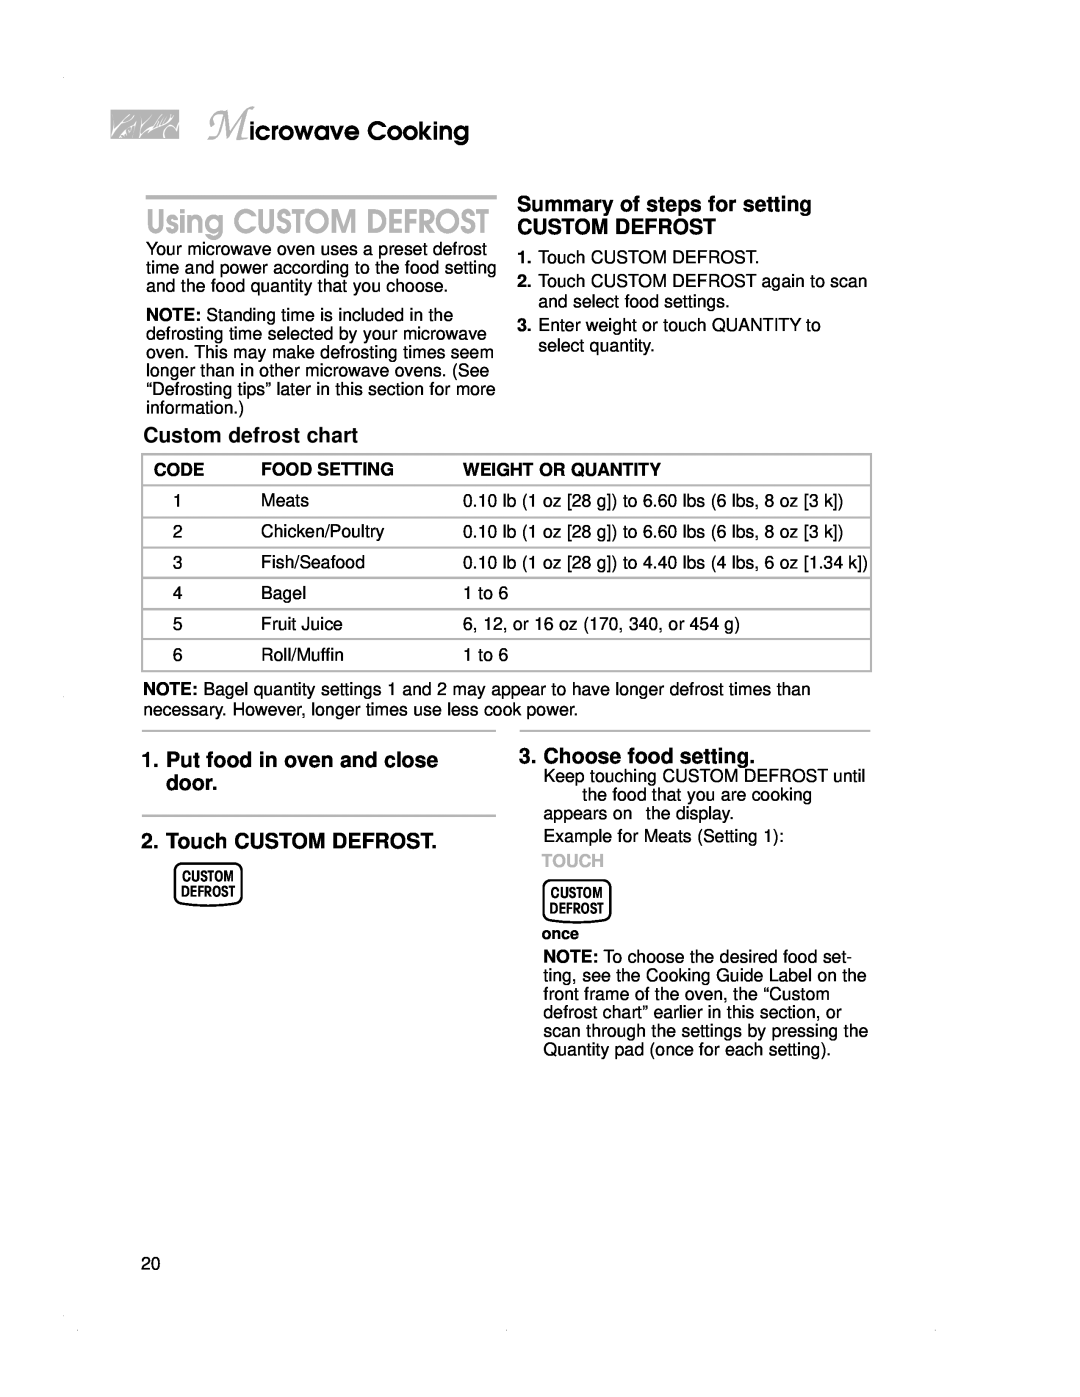 KitchenAid KEMS378G warranty Using CUSTOM DEFROST, Summary of steps for setting CUSTOM DEFROST, Custom defrost chart, Touch 